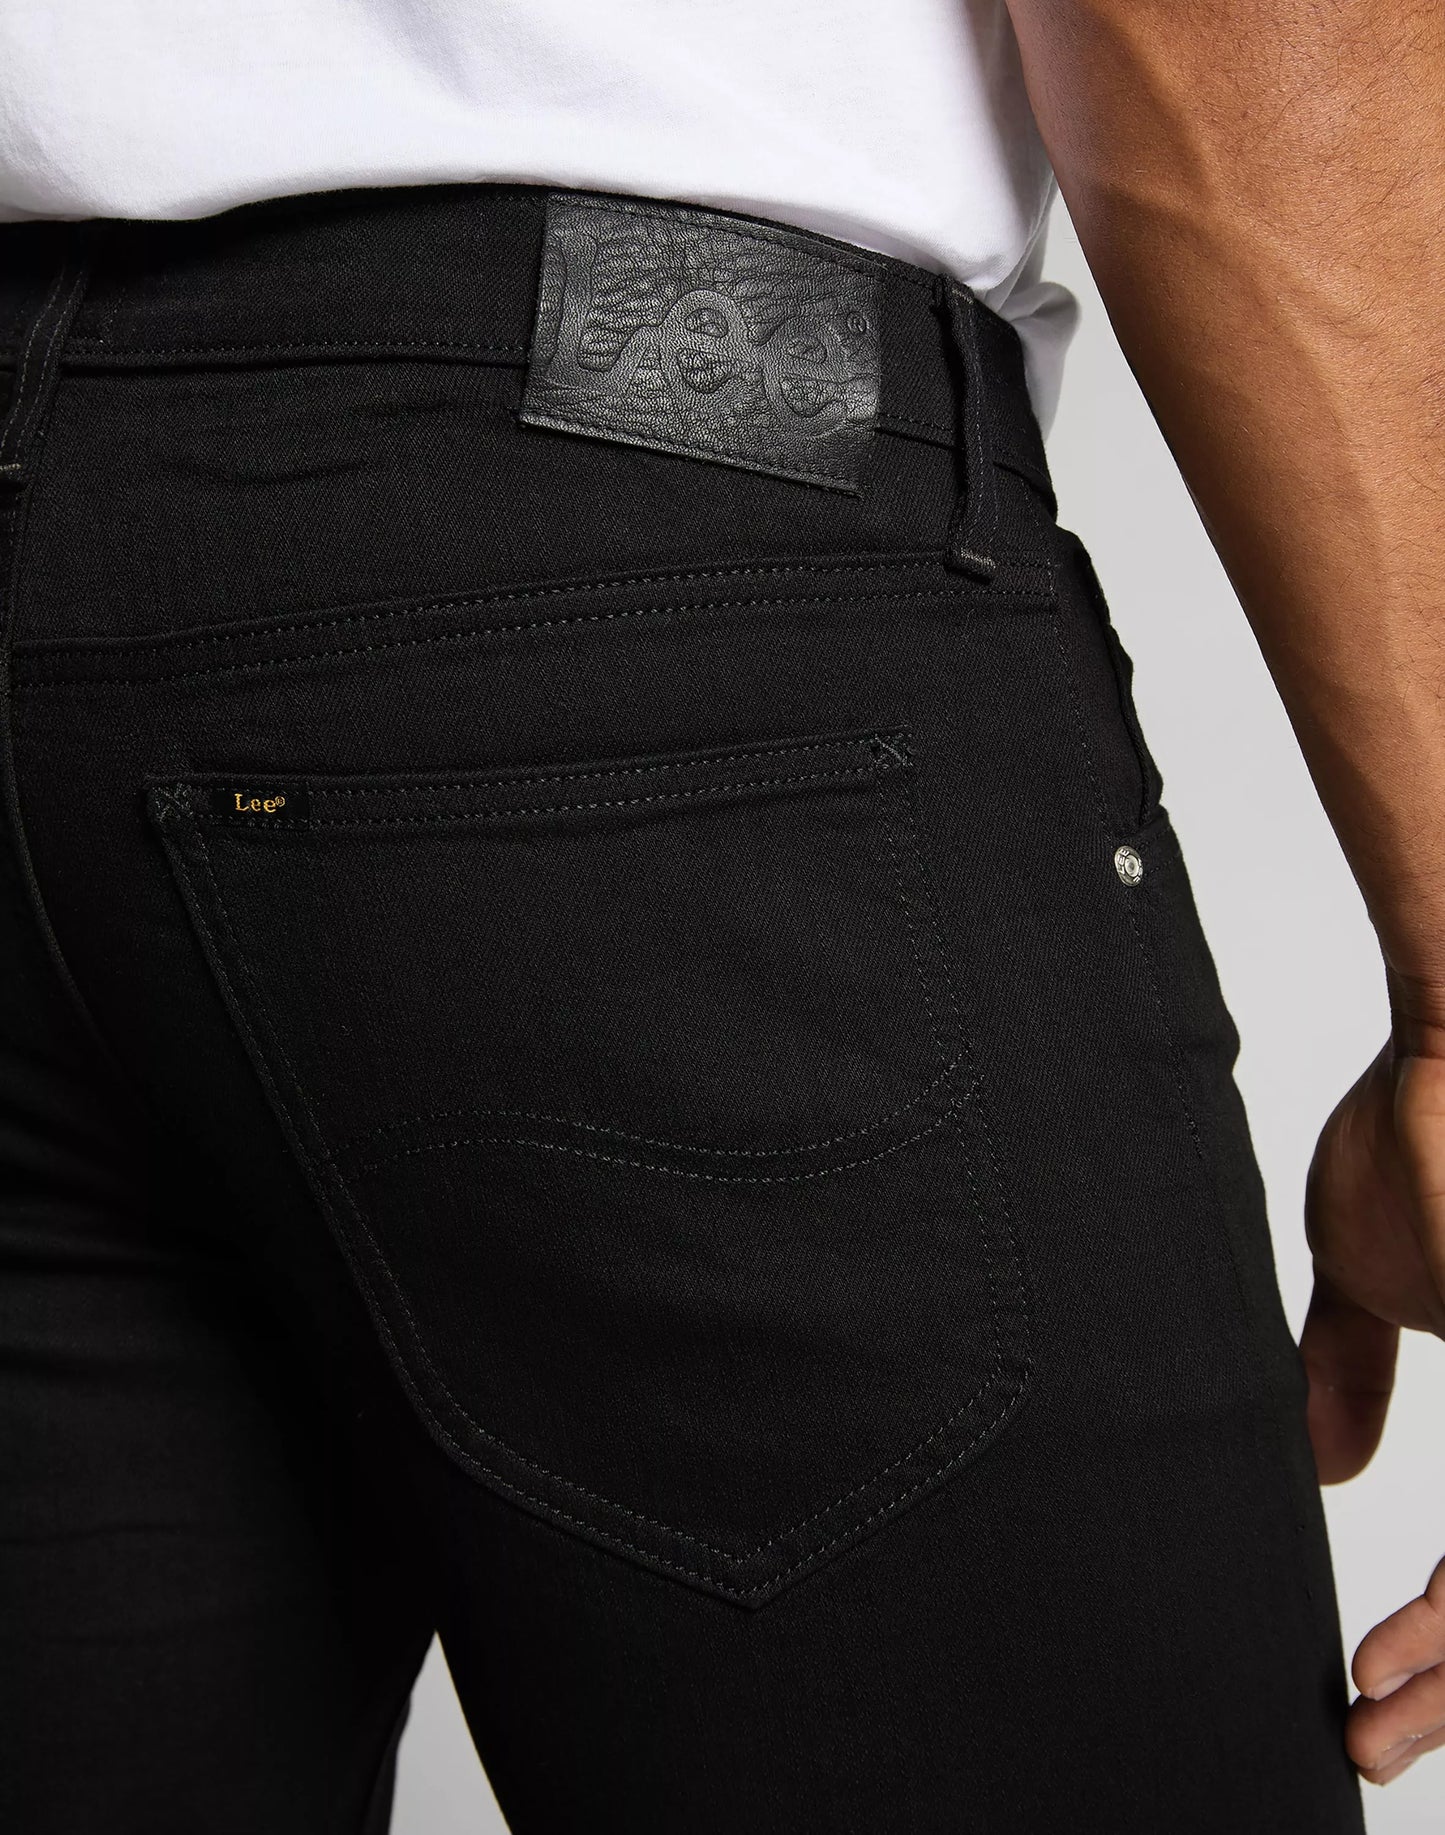 Lee Jeans Rider Slim Fit Black - RD1 Clothing